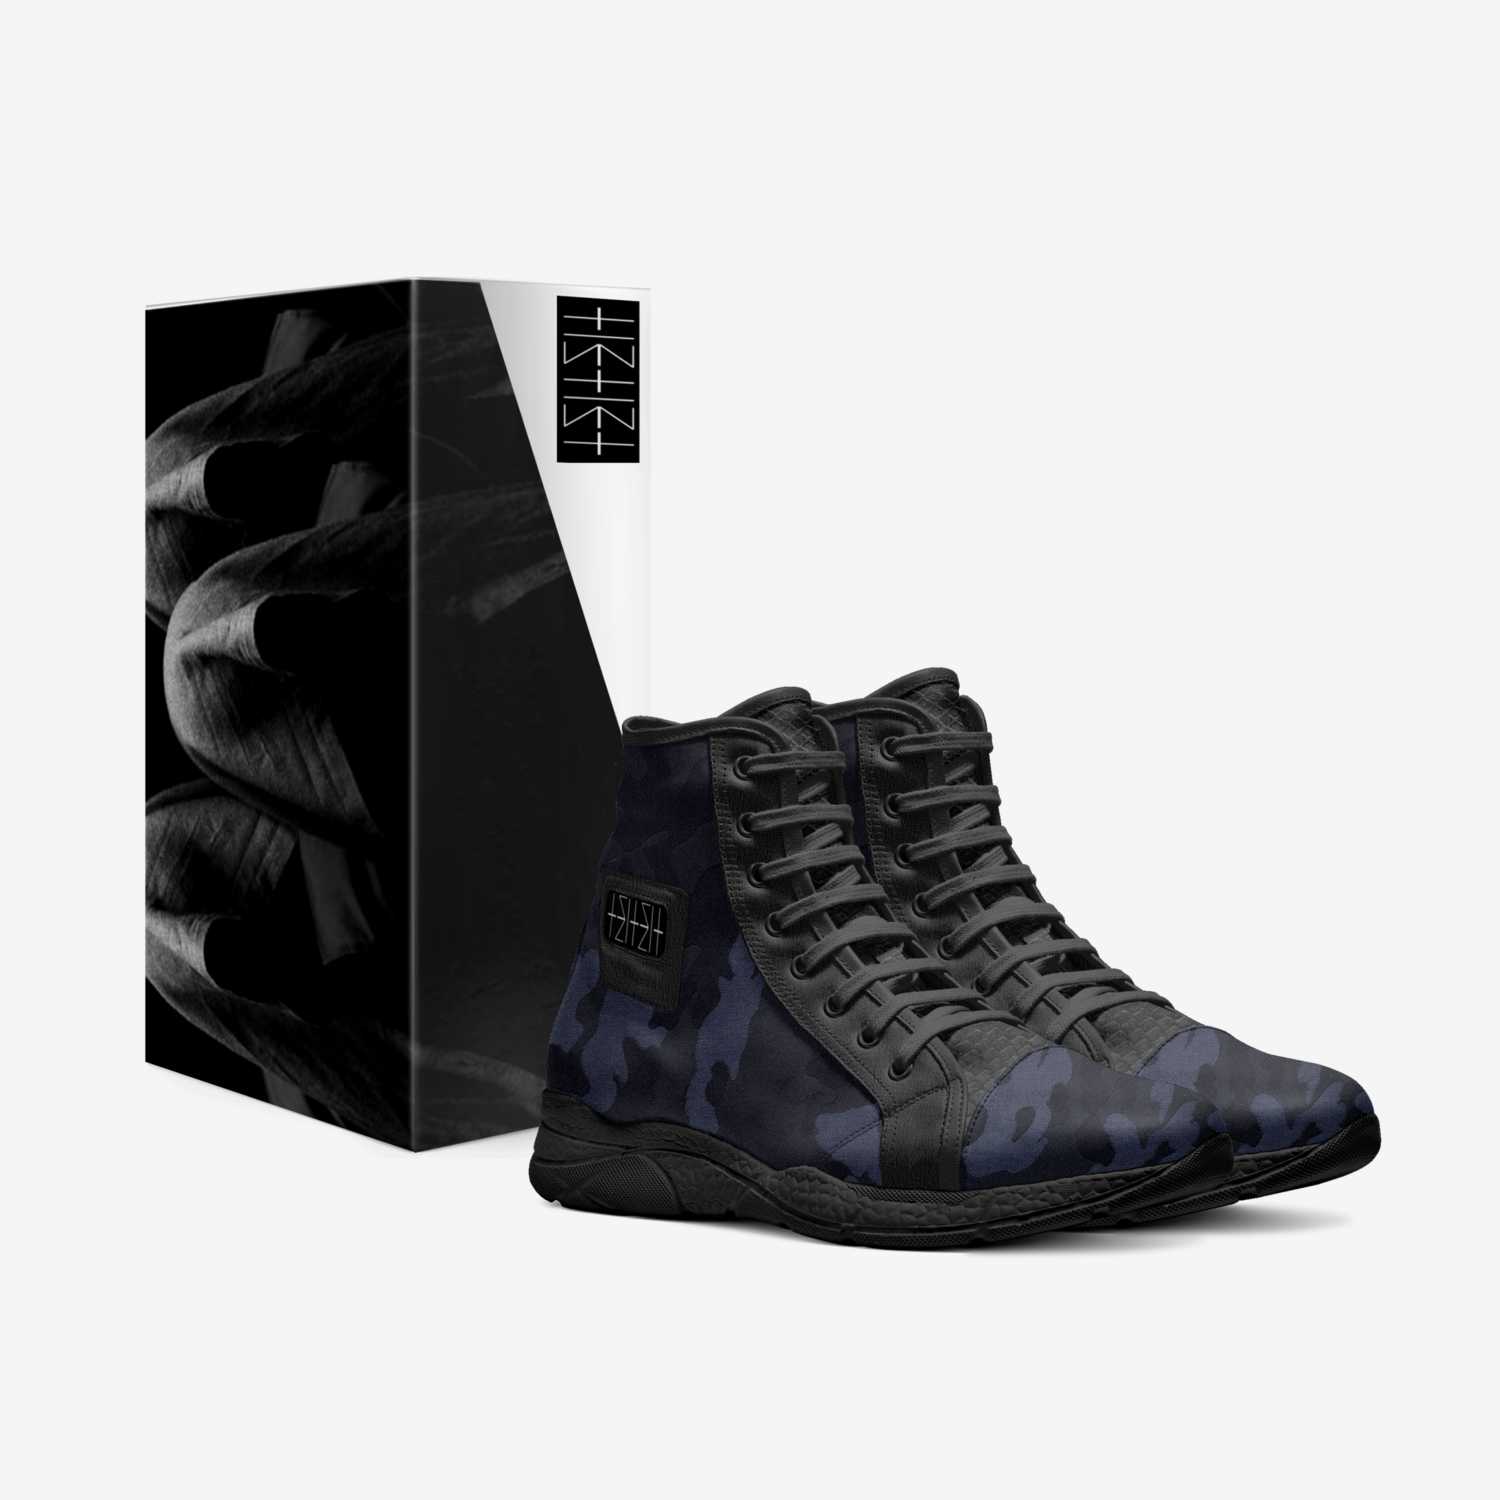 Siqariyim custom made in Italy shoes by Ricardo Yoreh Ladino | Box view